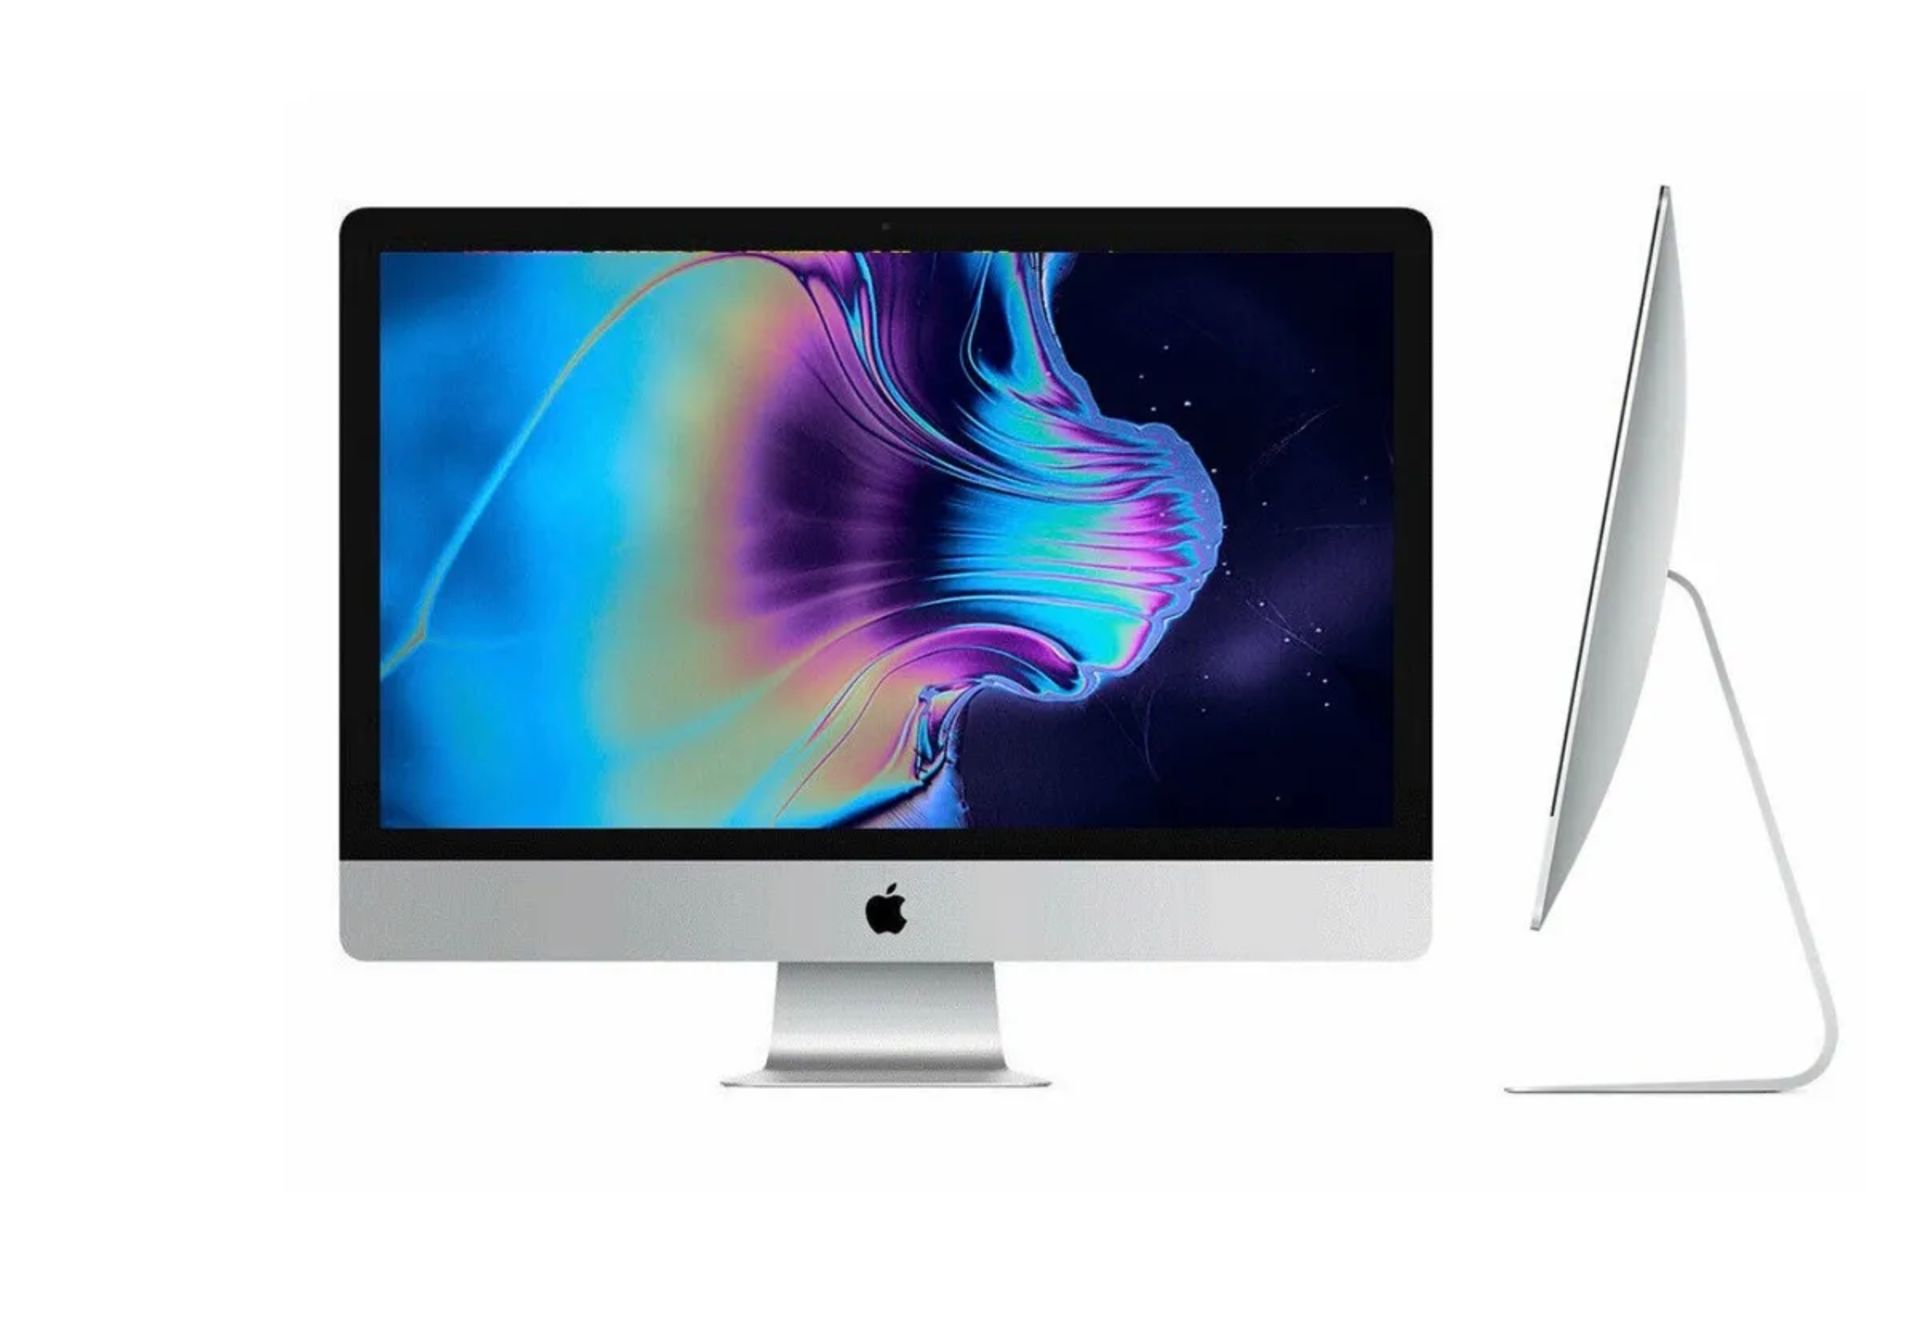 Apple iMac 27” A1419 Slim (2013) Intel Core i5 Quad Core 8GB Memory 1TB HD WiFi Office #